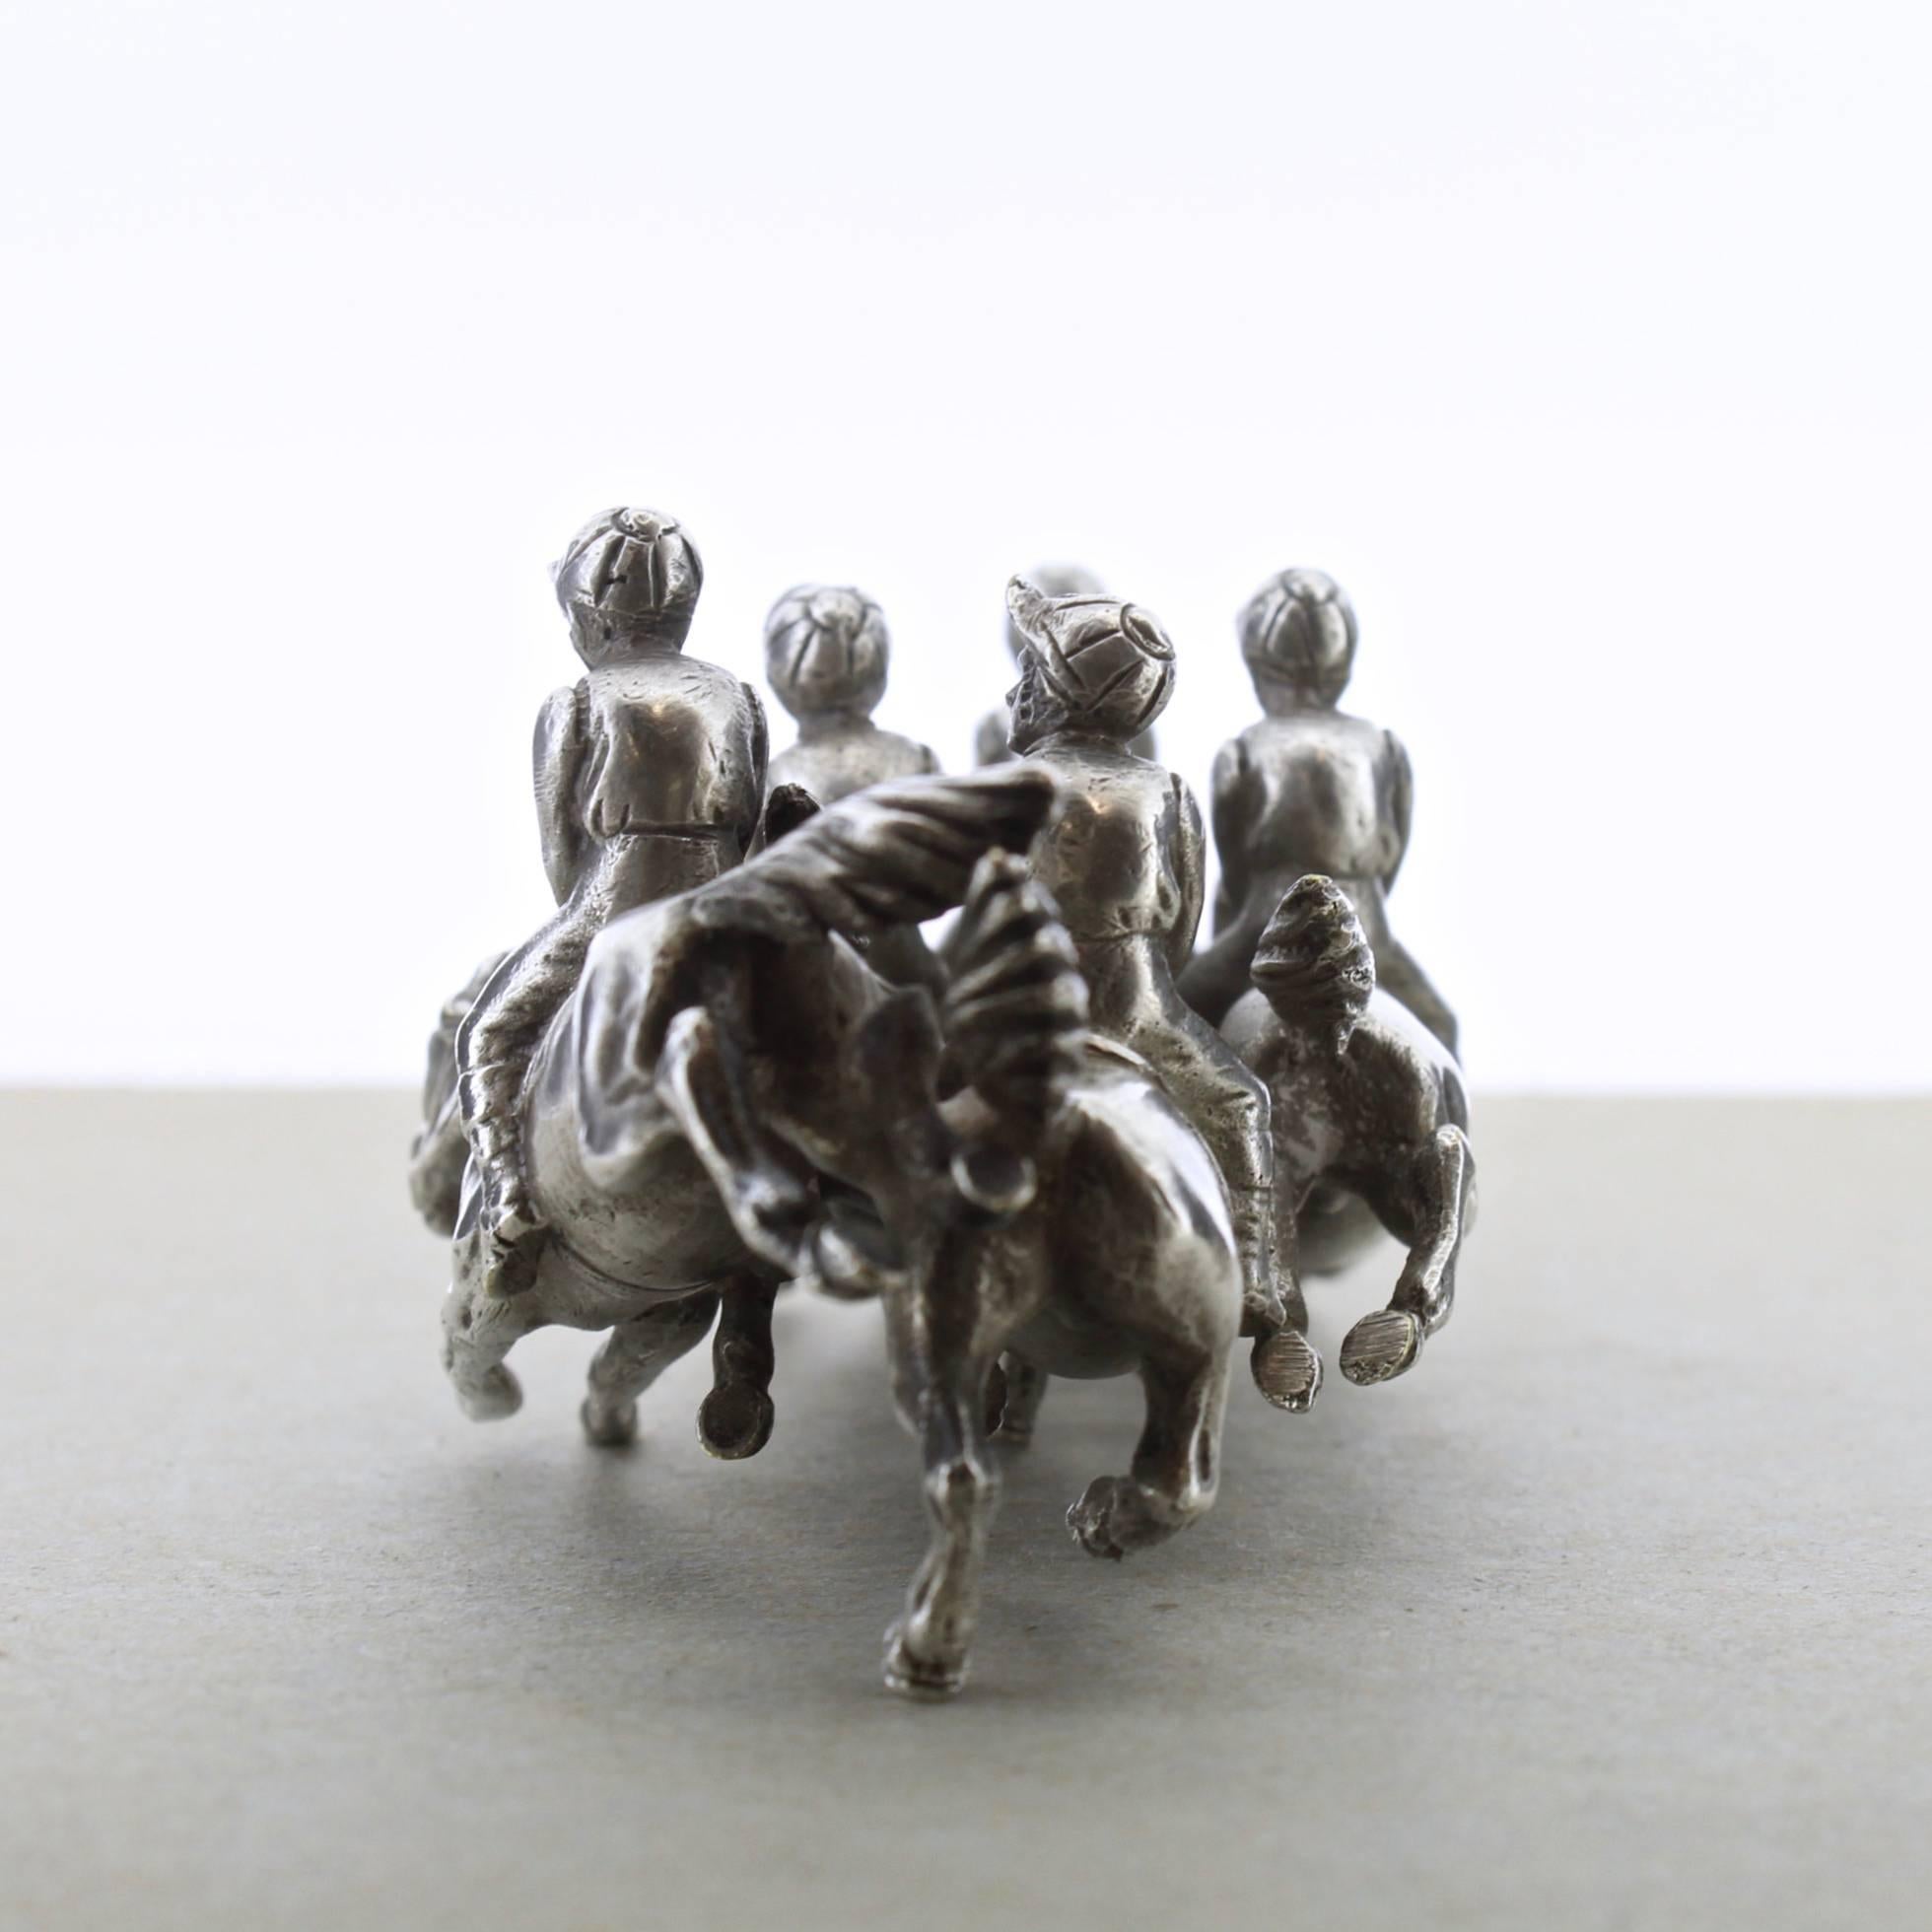 Silver Plate Fine Vintage Silverplate Miniature Horse Racing Sculpture with Jockeys & Horses